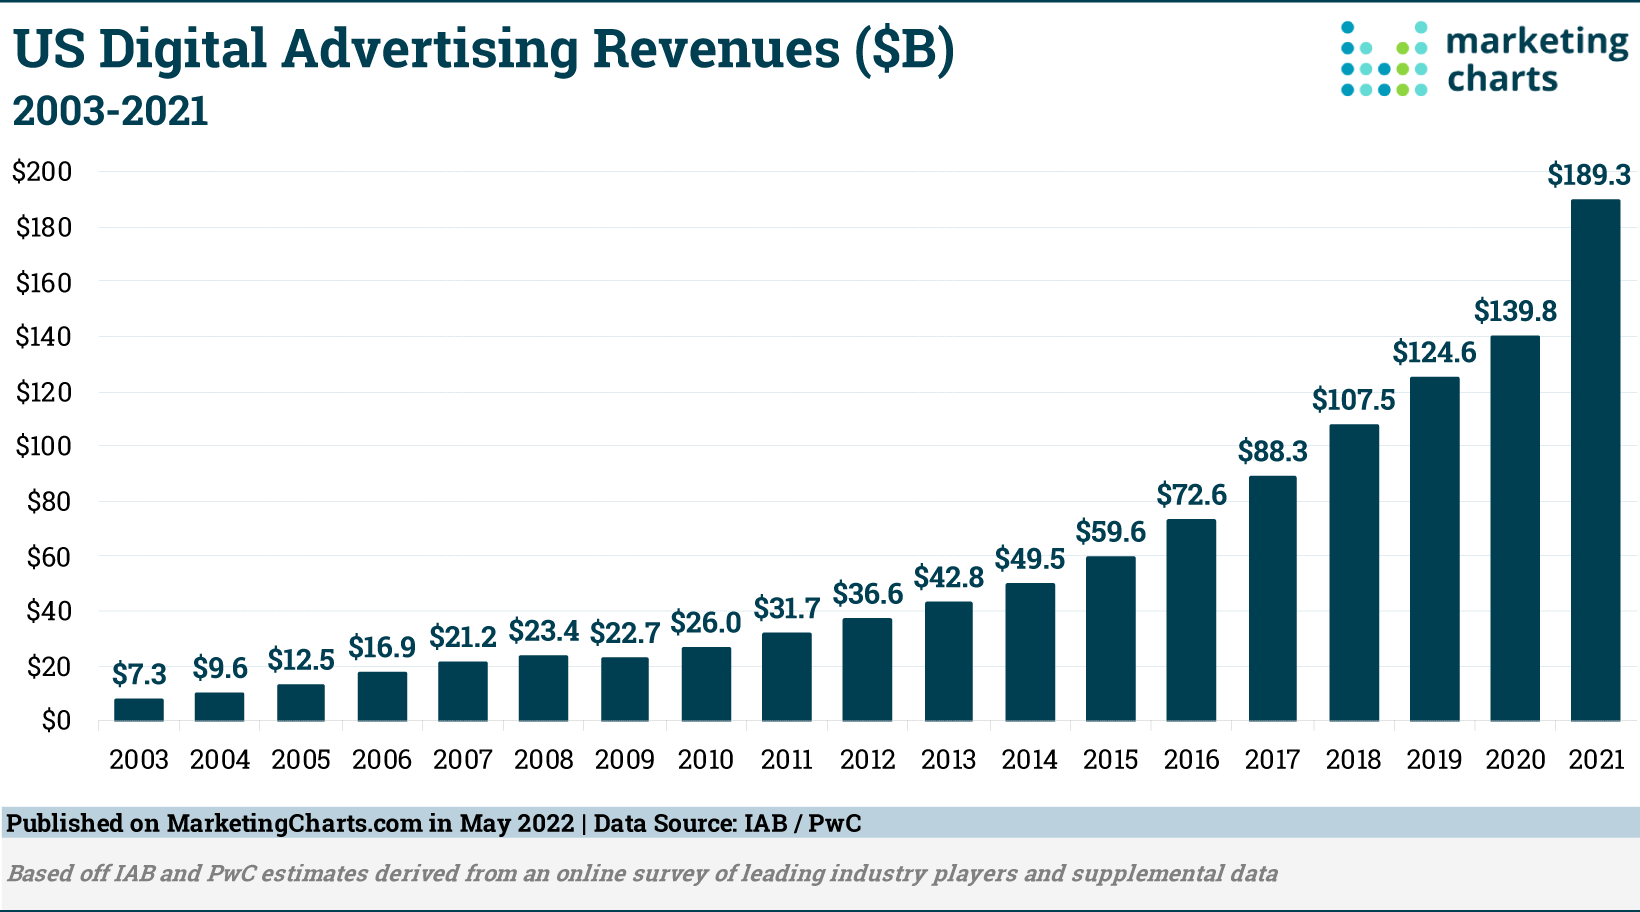 US Digital Advertising Revenues ($B)